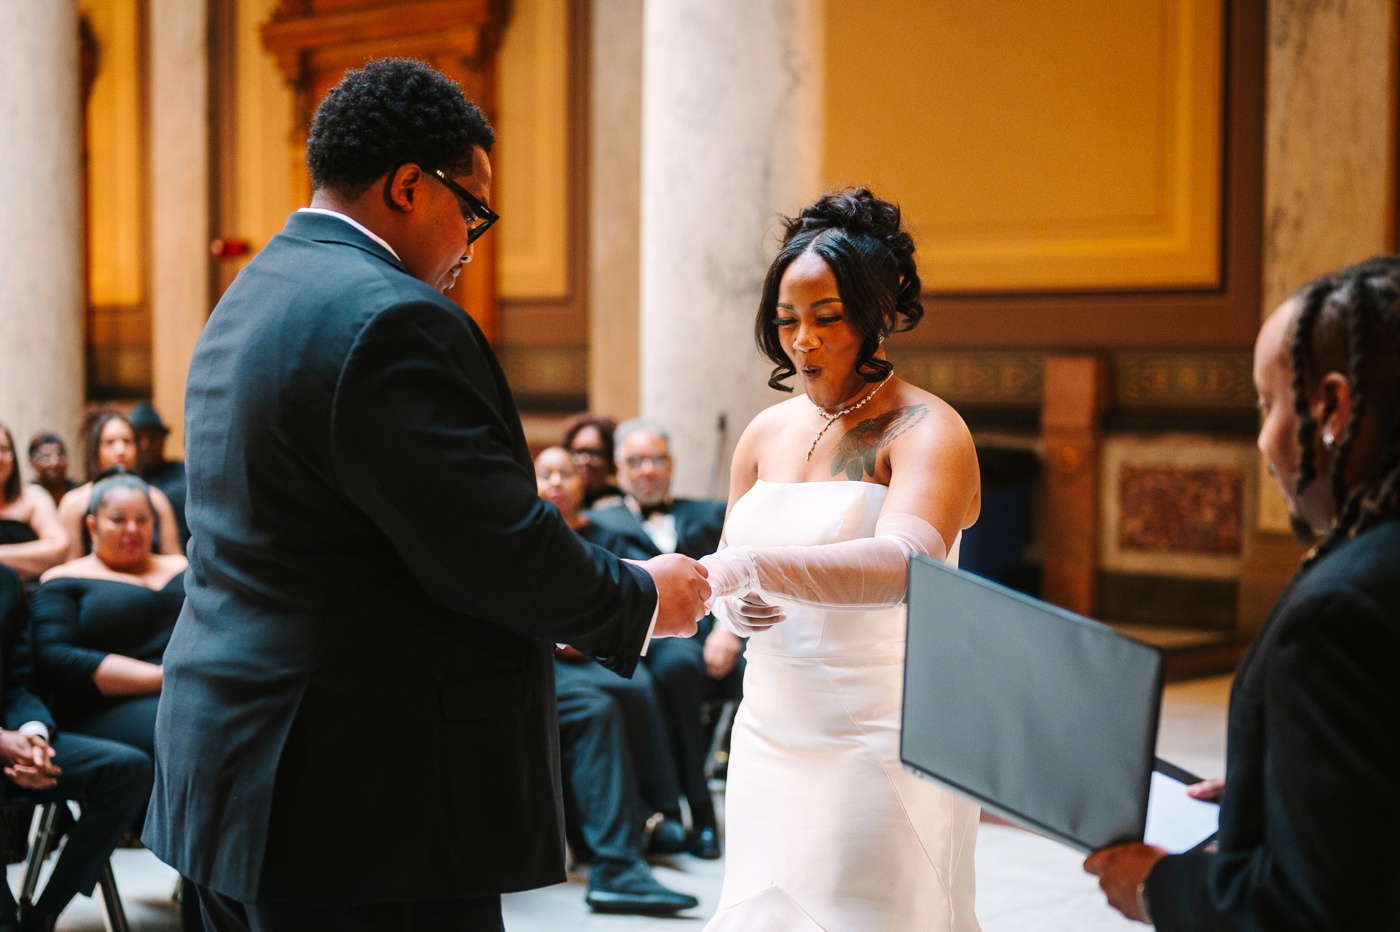 Wedding ceremony at the Indiana Statehouse